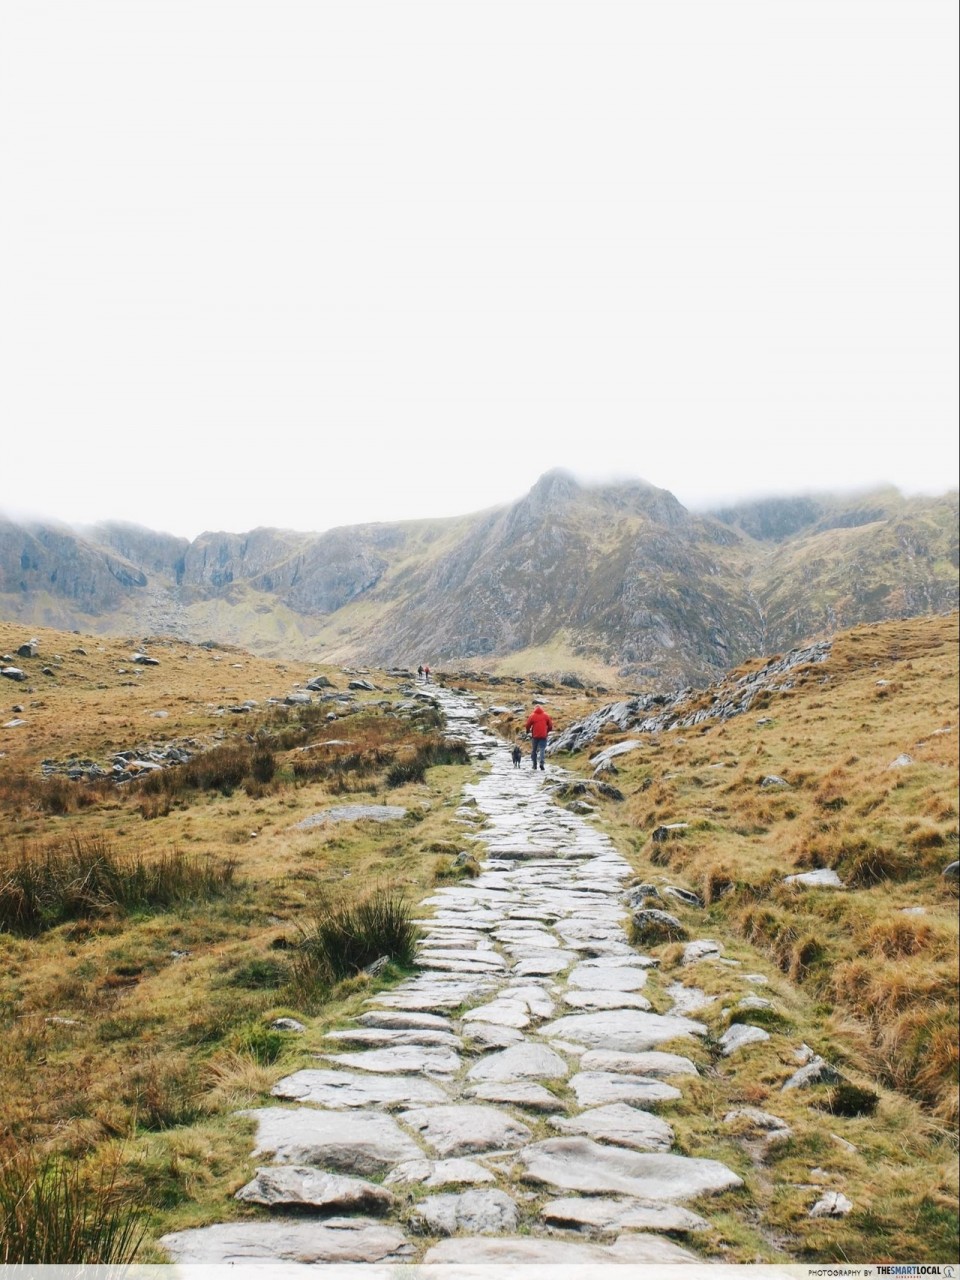 Hiking in Europe - Stone path